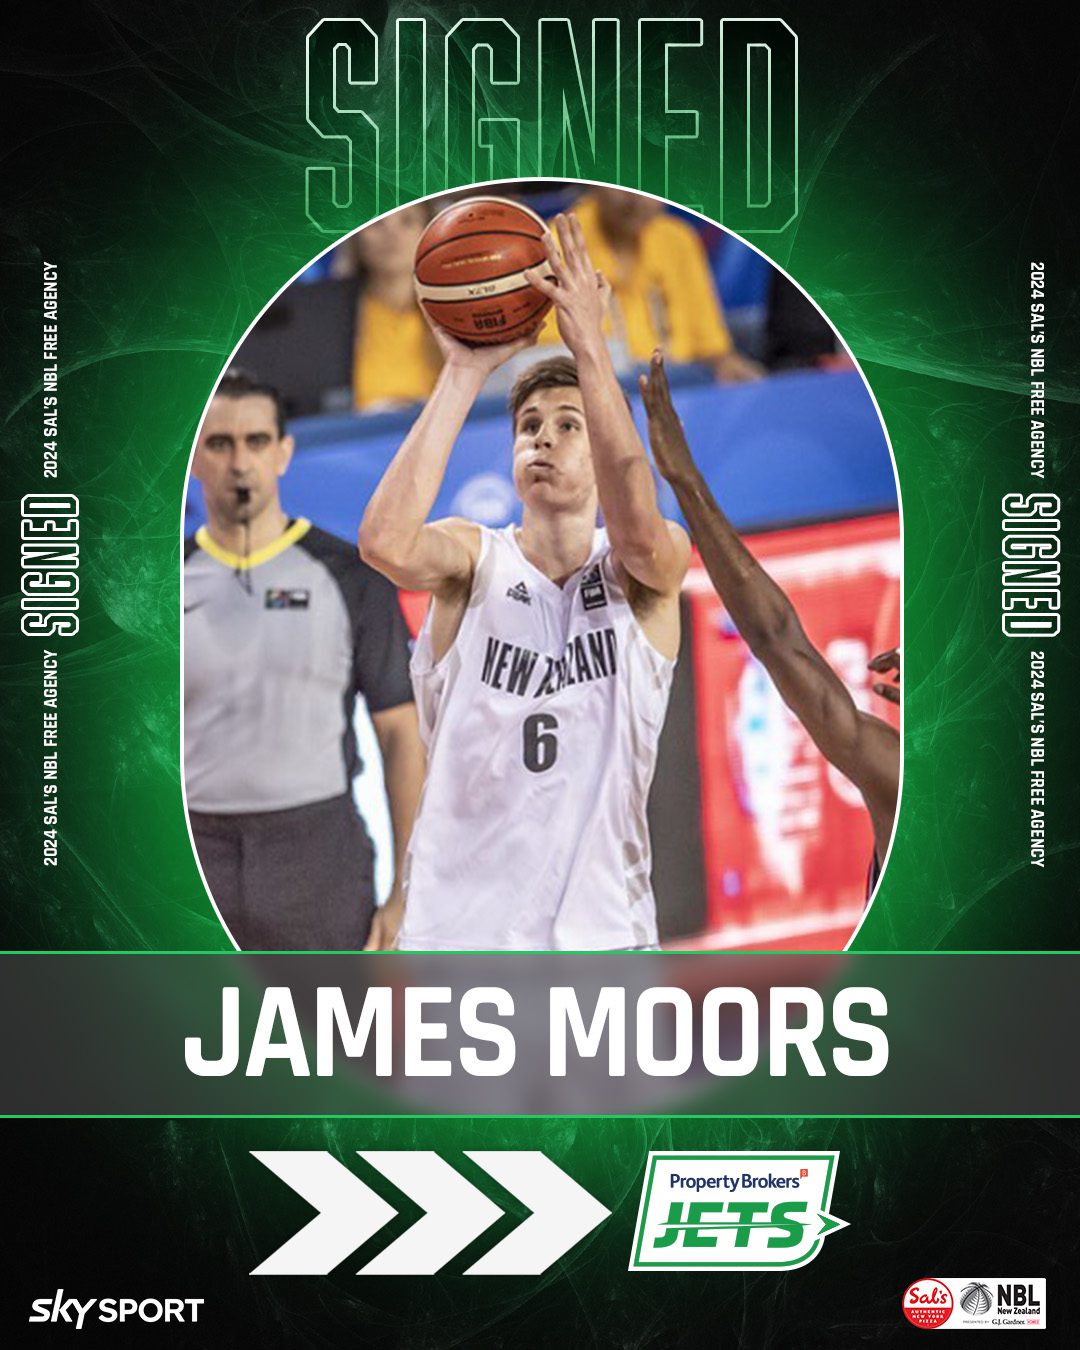 James Moors